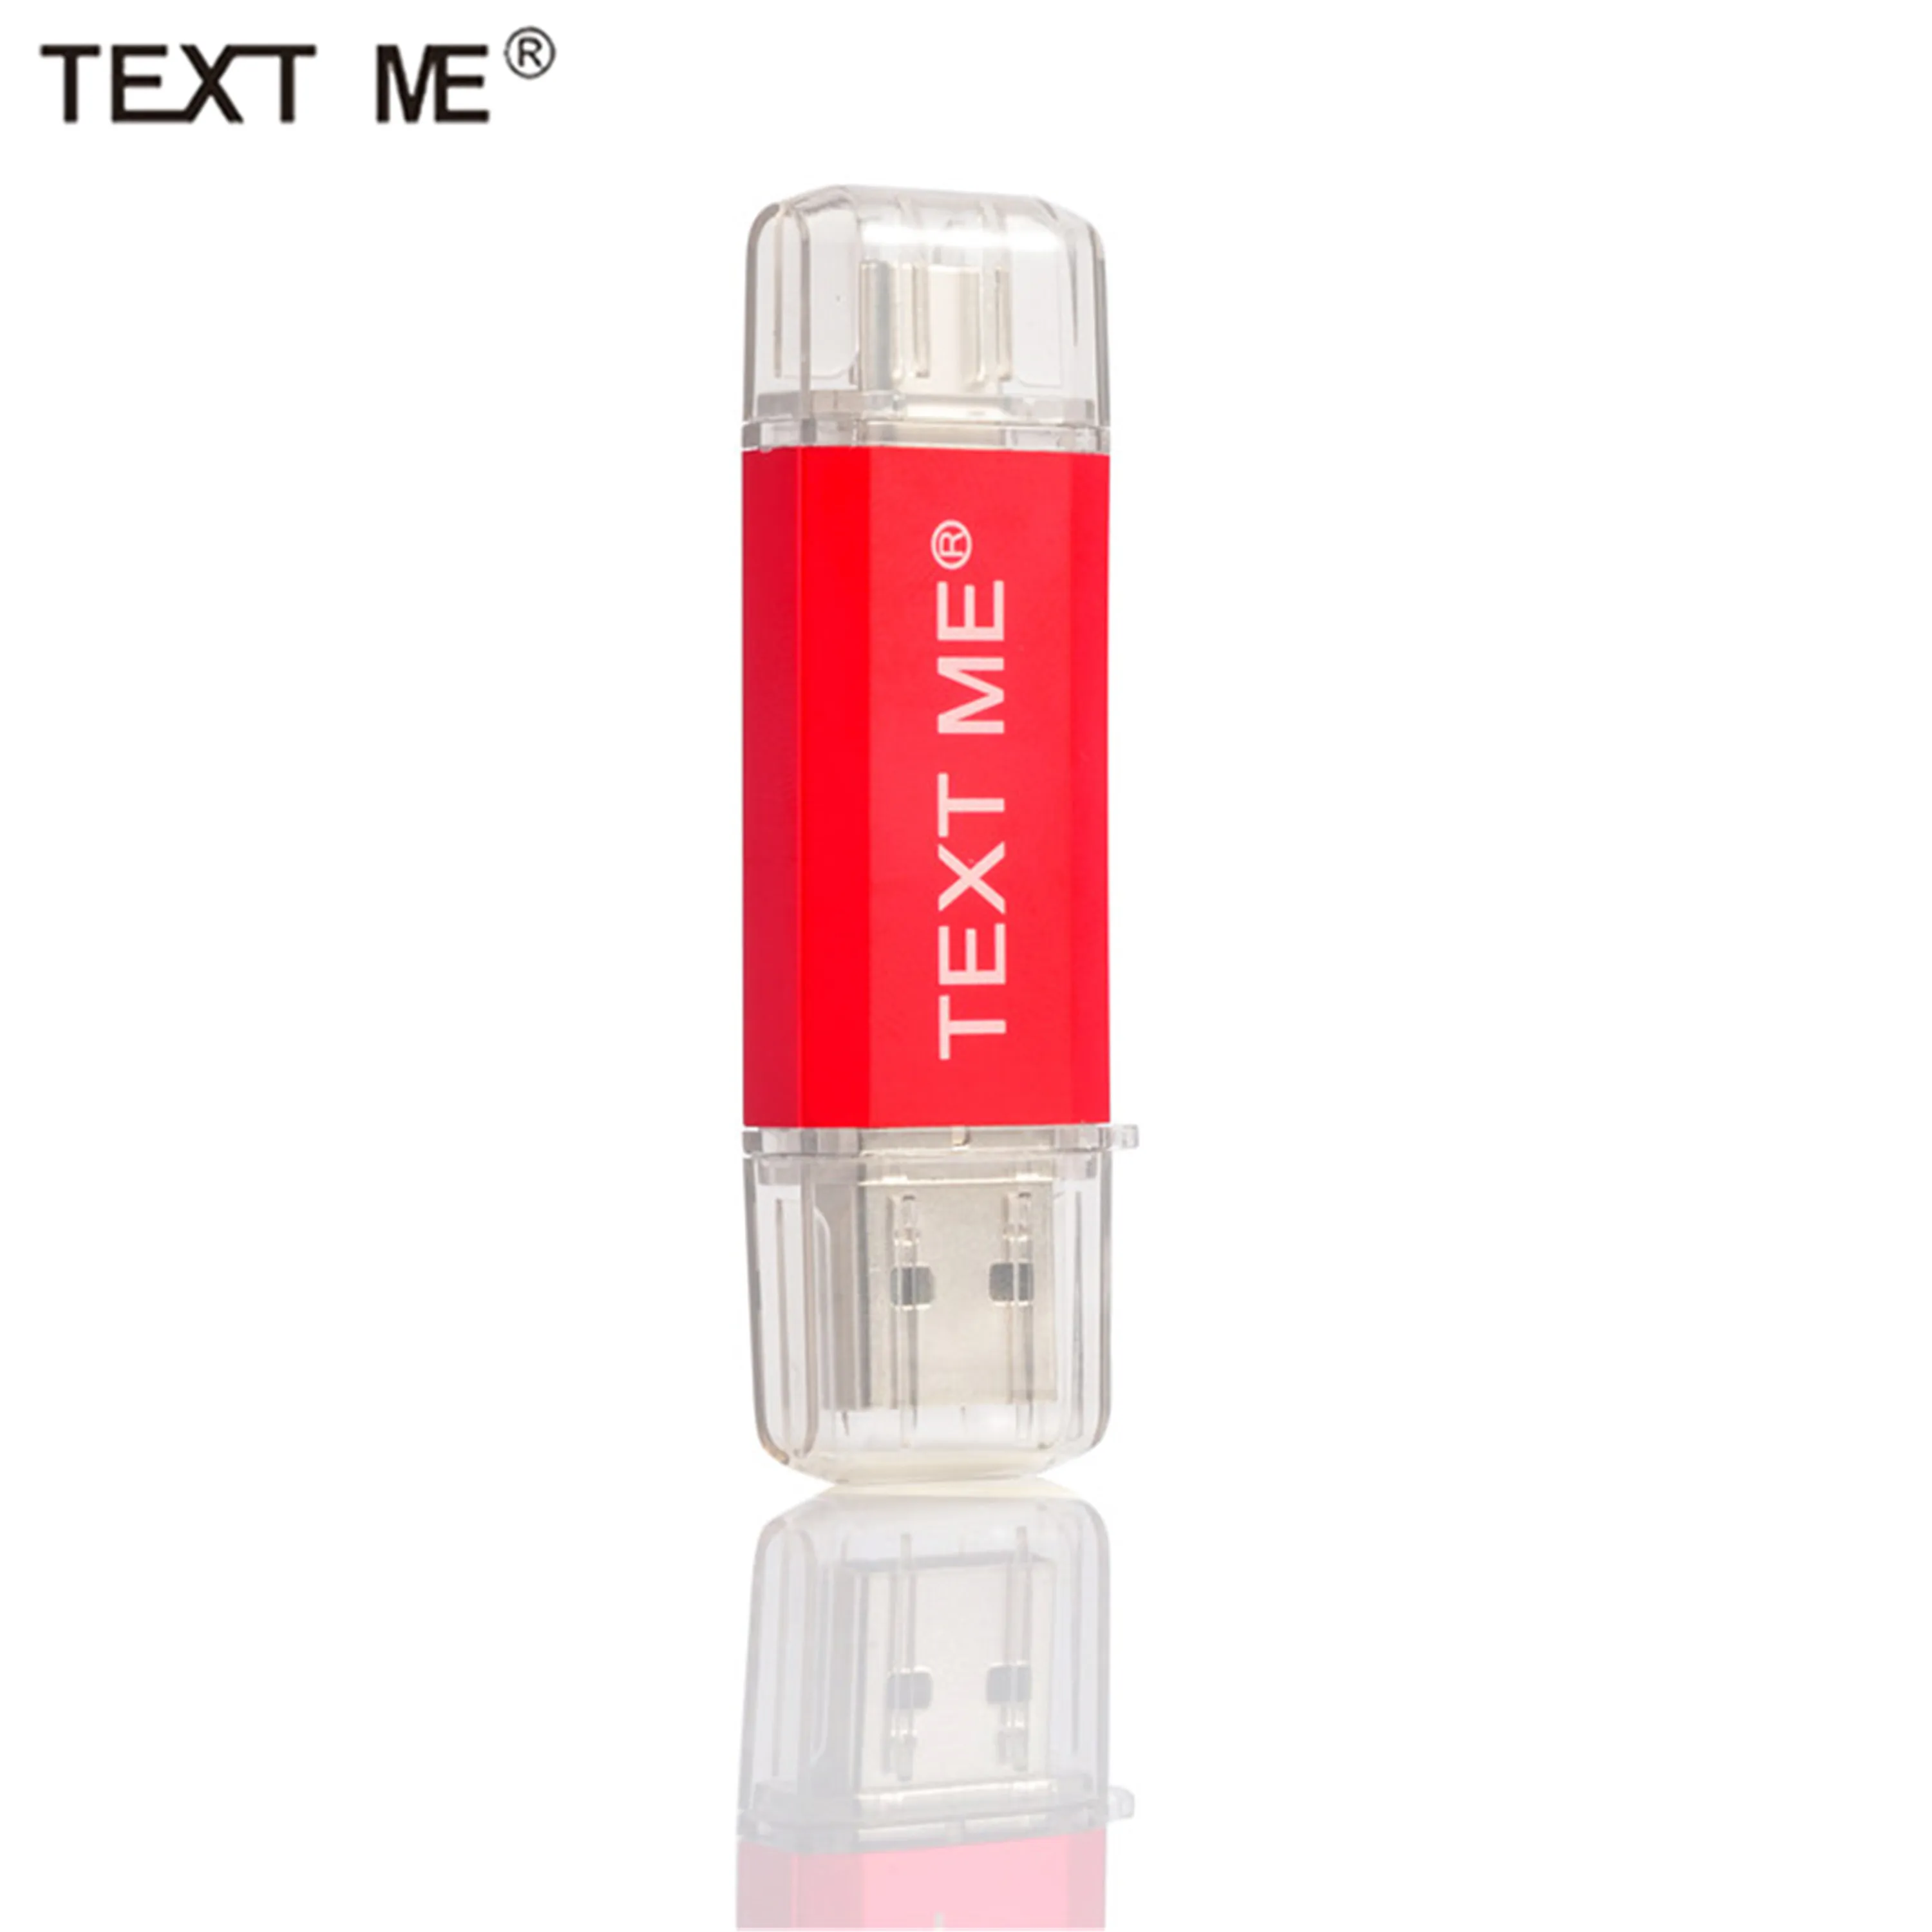 TEXT MI tvorivý Typ-C, USB Flash Disk Typu C Pen Drive 64 GB 32 GB, 16 GB 8 GB 4GBUSB Stick 2.0 kl ' úč pre Typ-C